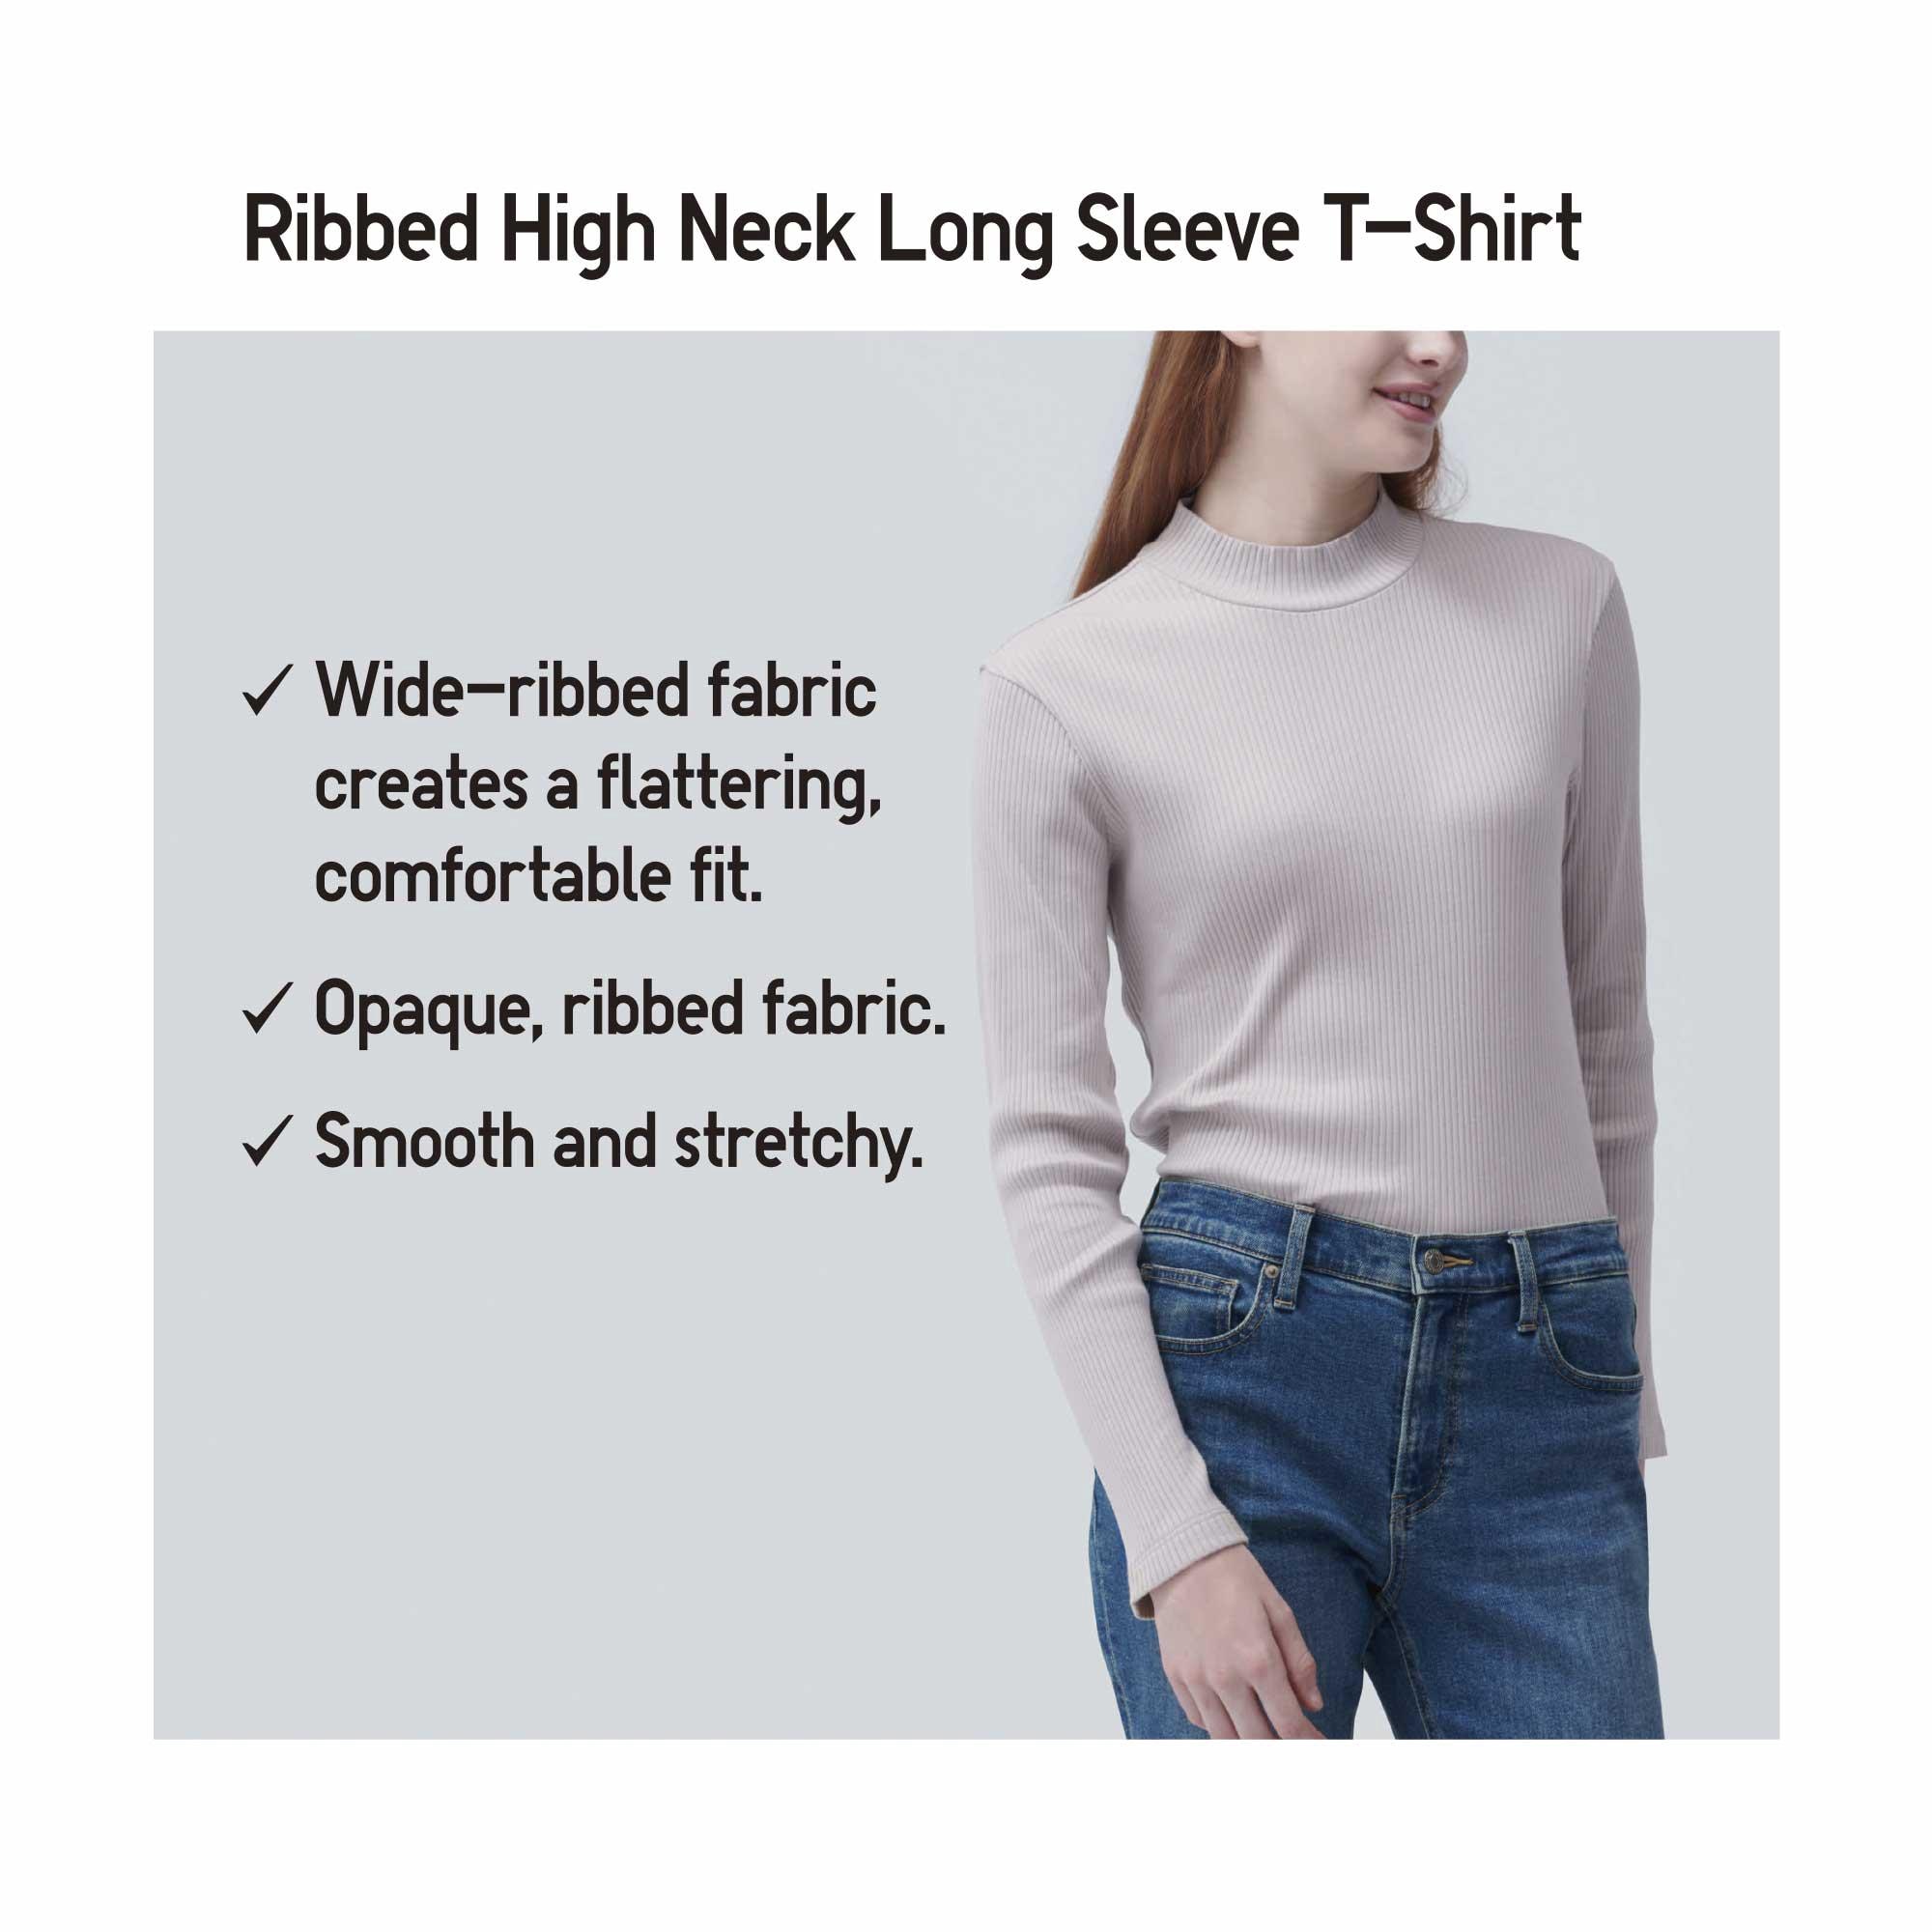 Ribbed High Neck Long Sleeve T-Shirt